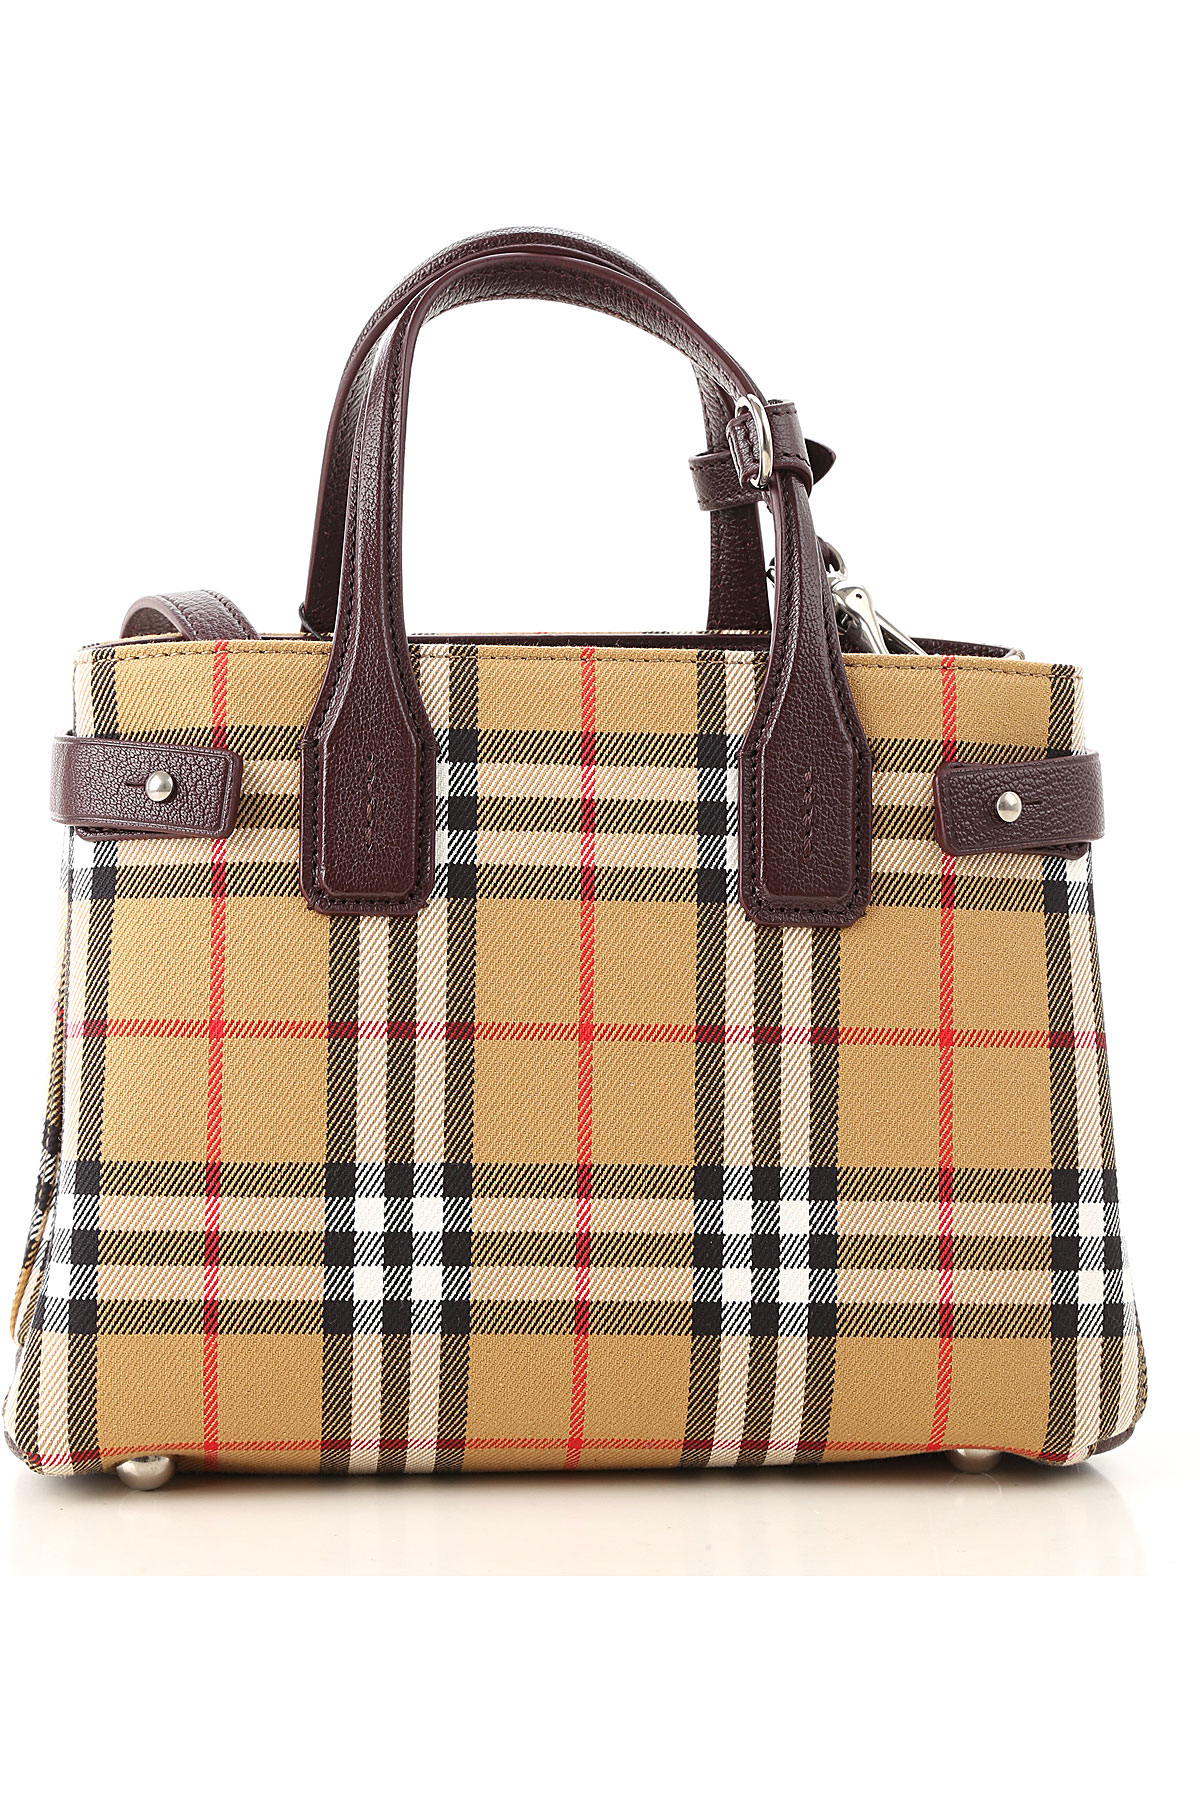 Handbags Burberry, Style code: 4076950-60970-B167